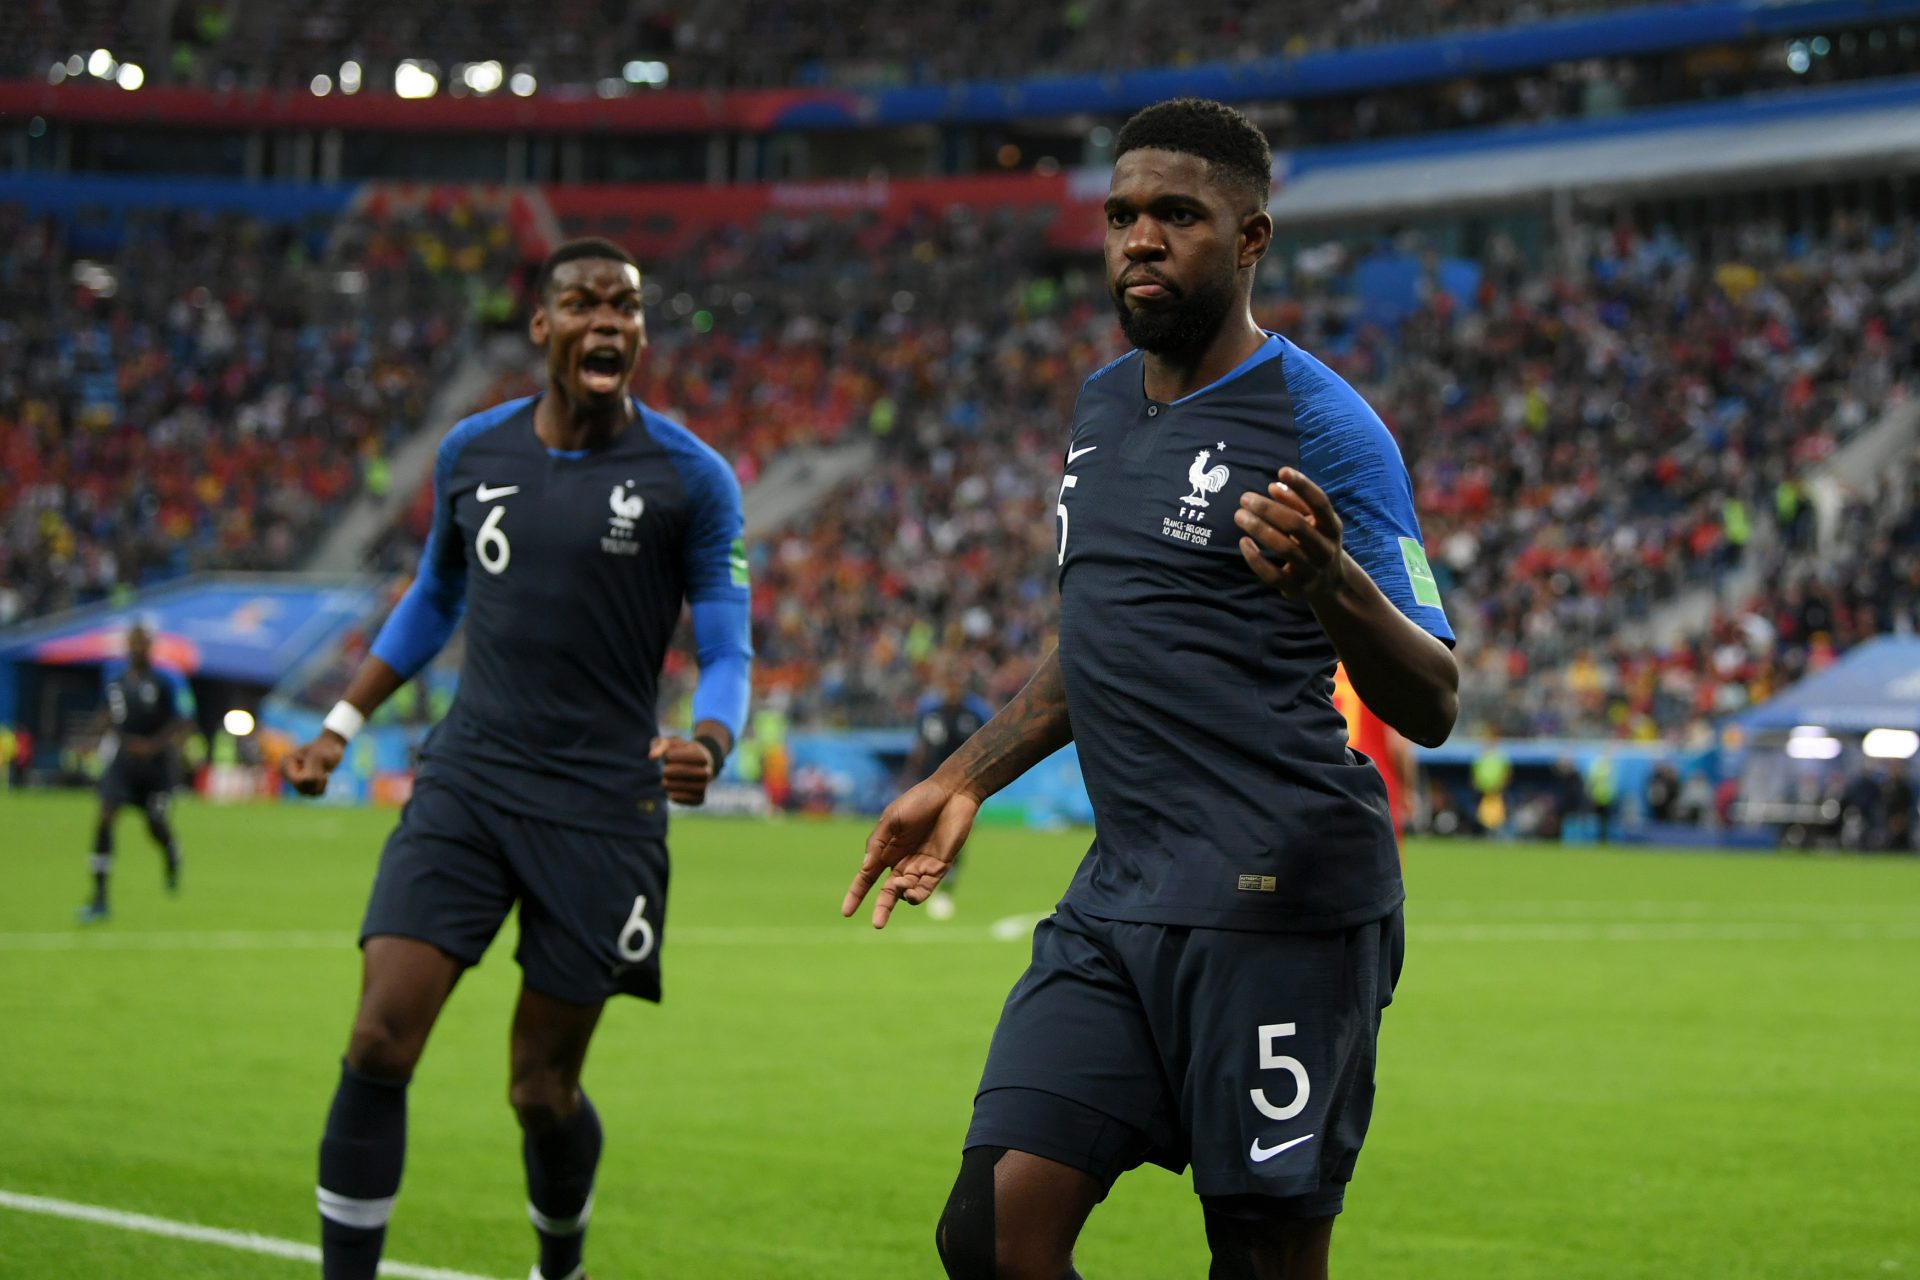 France vs Belgium: Who overcomes the slump?